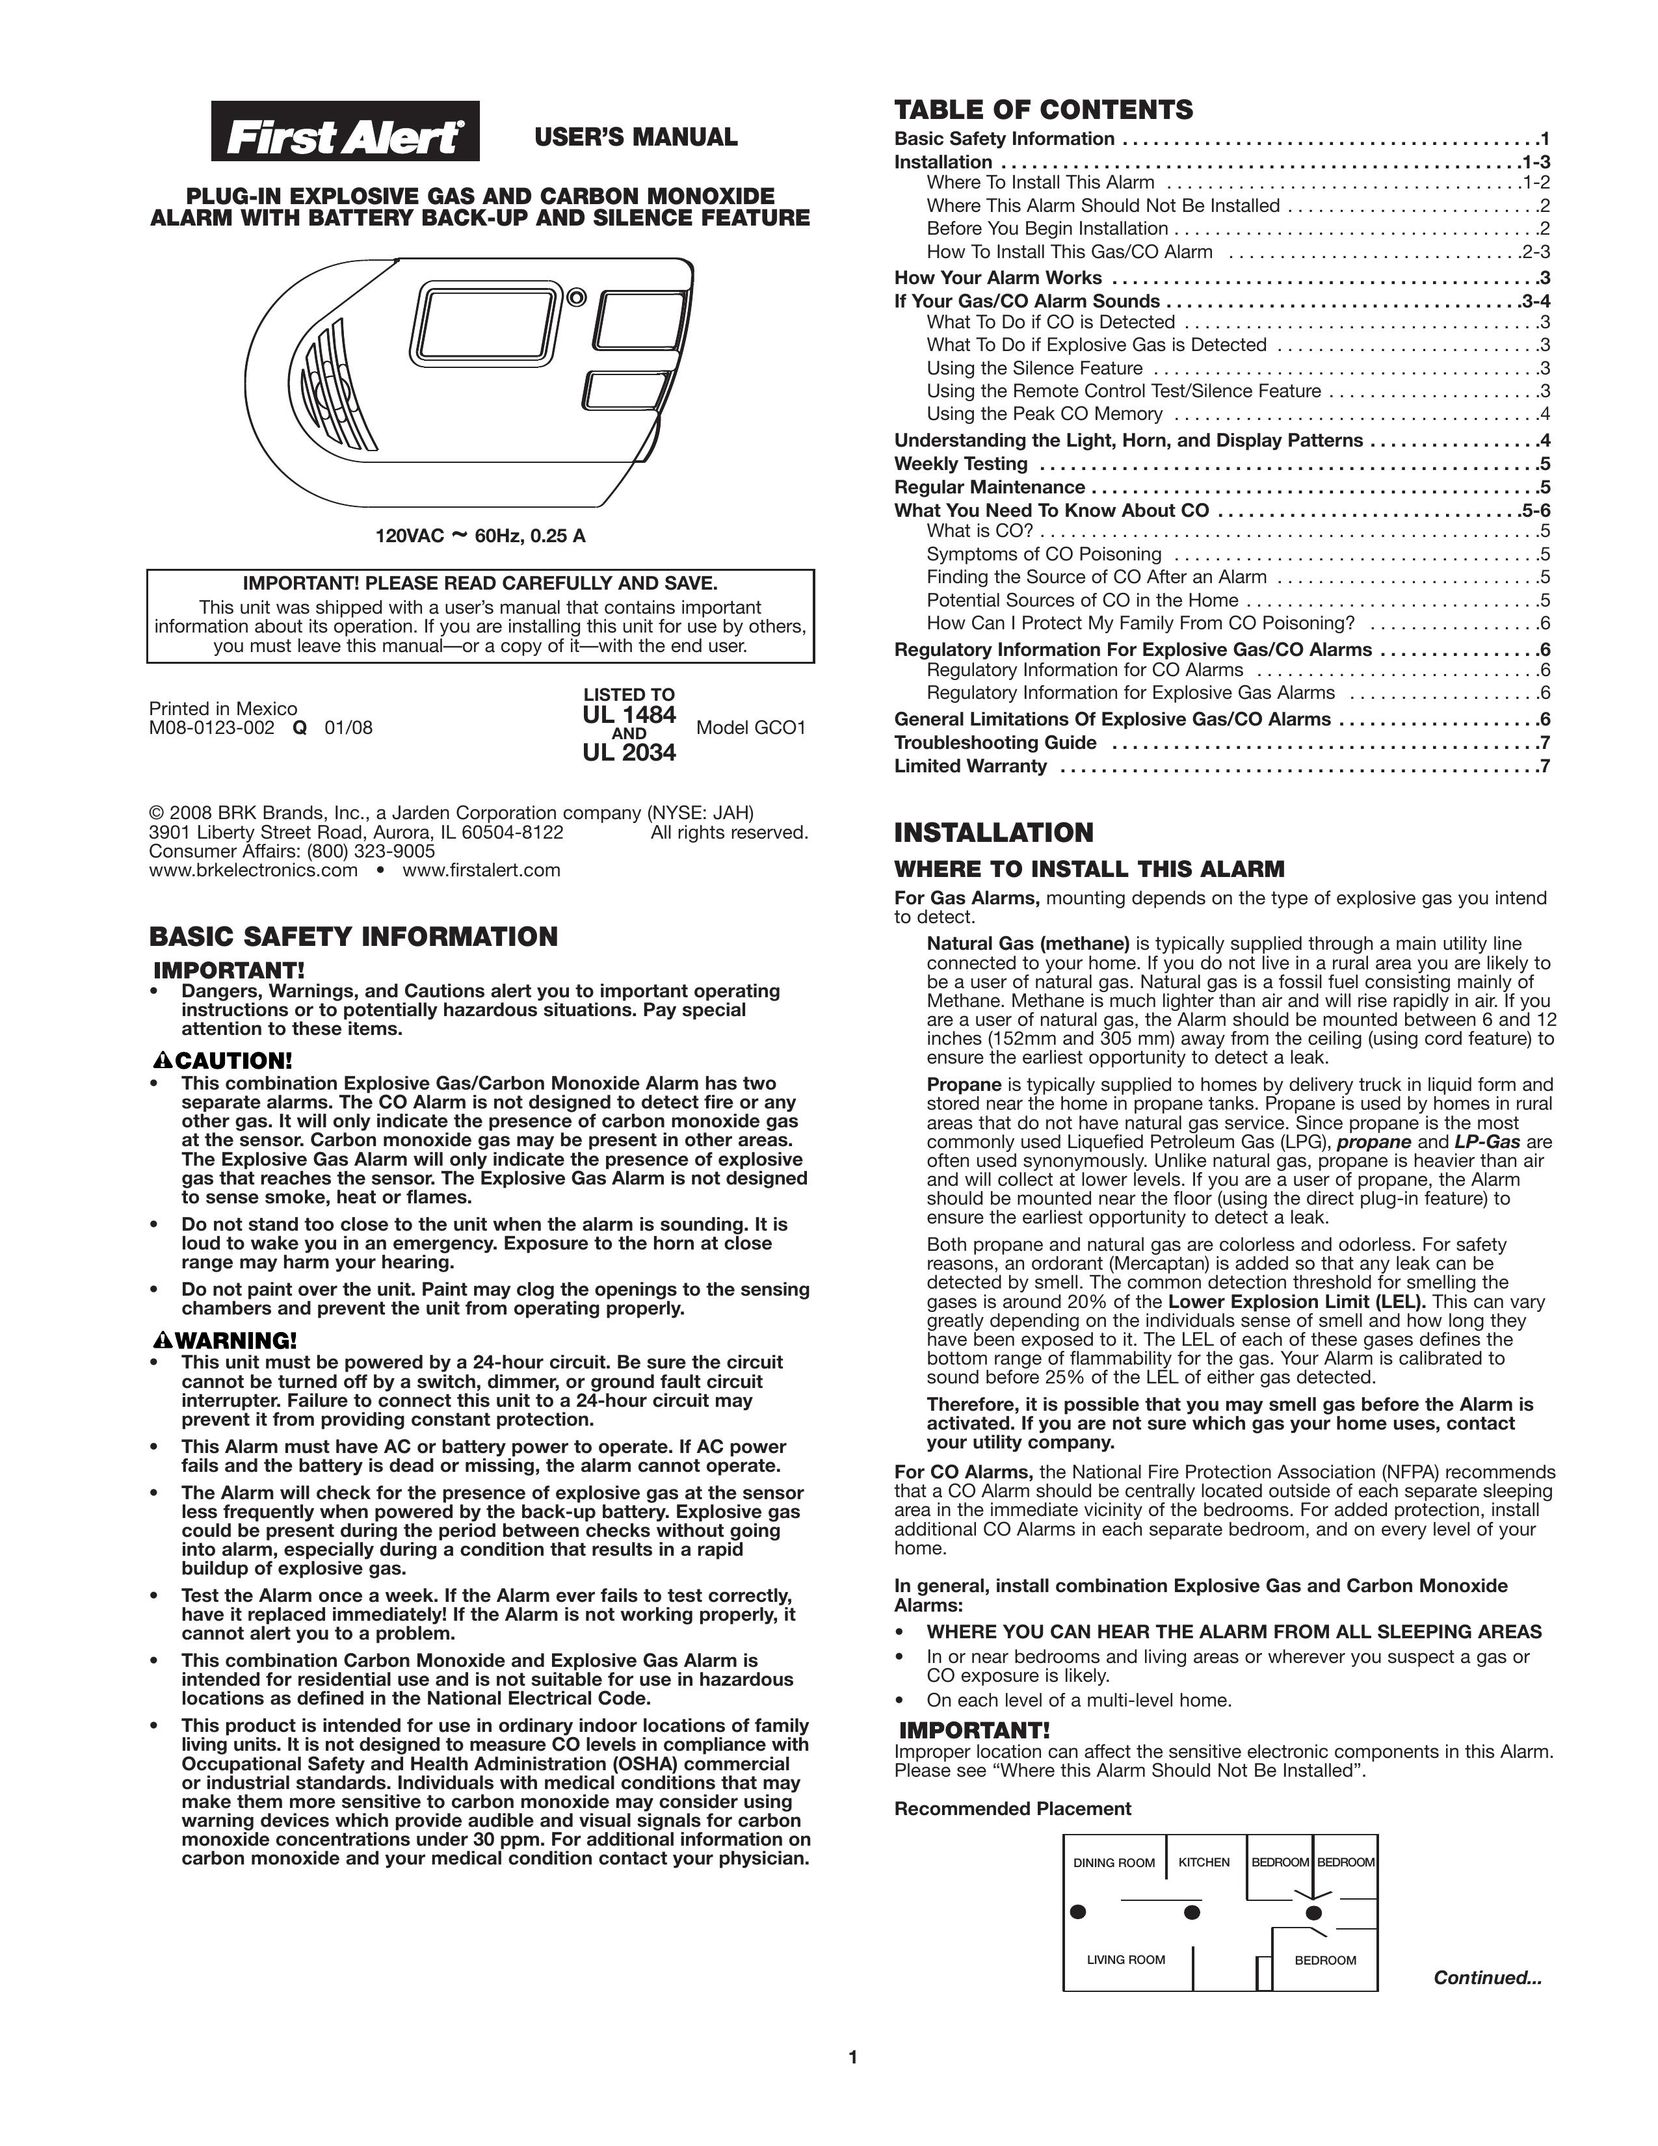 First Alert Model GCO1 Carbon Monoxide Alarm User Manual